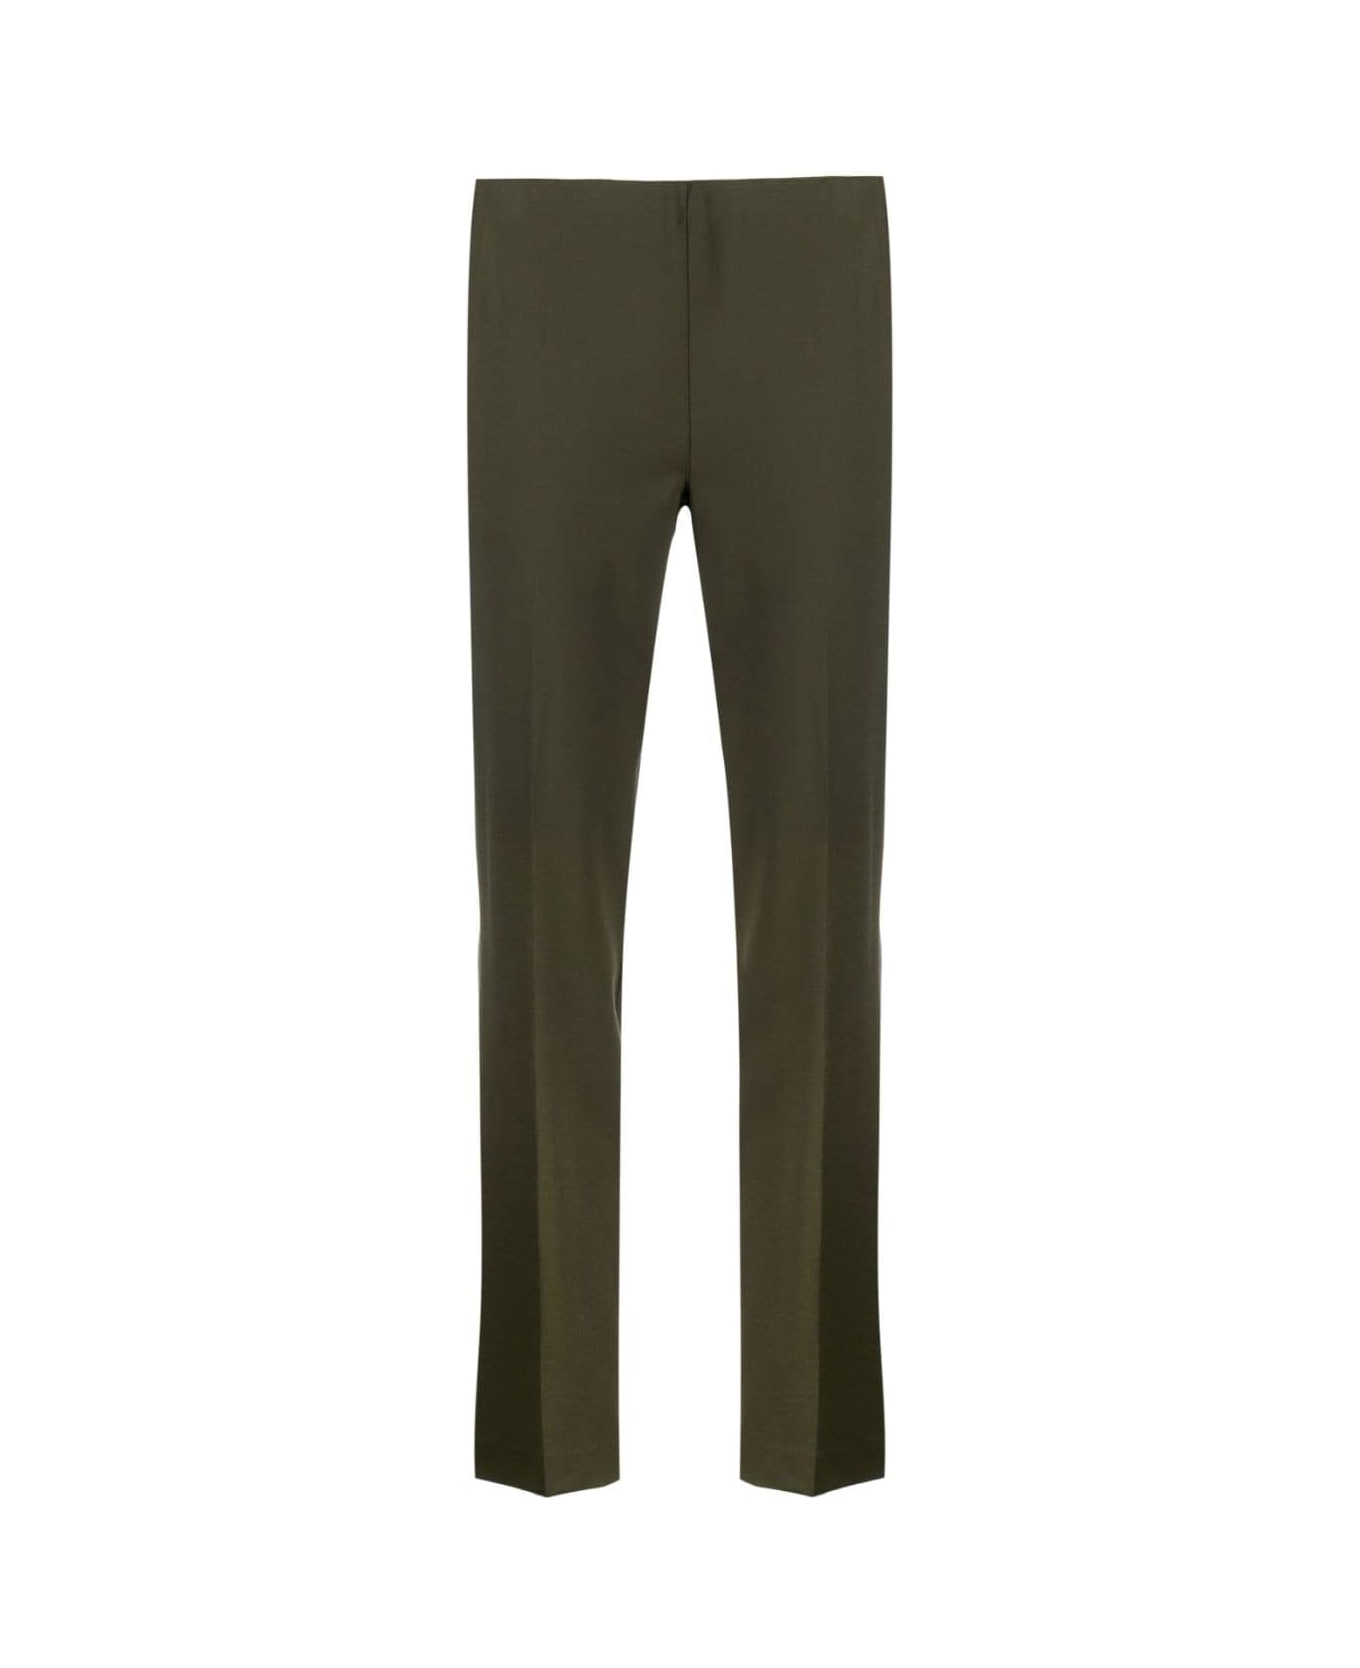 Parosh Elastic Waist Trousers - Olive Green